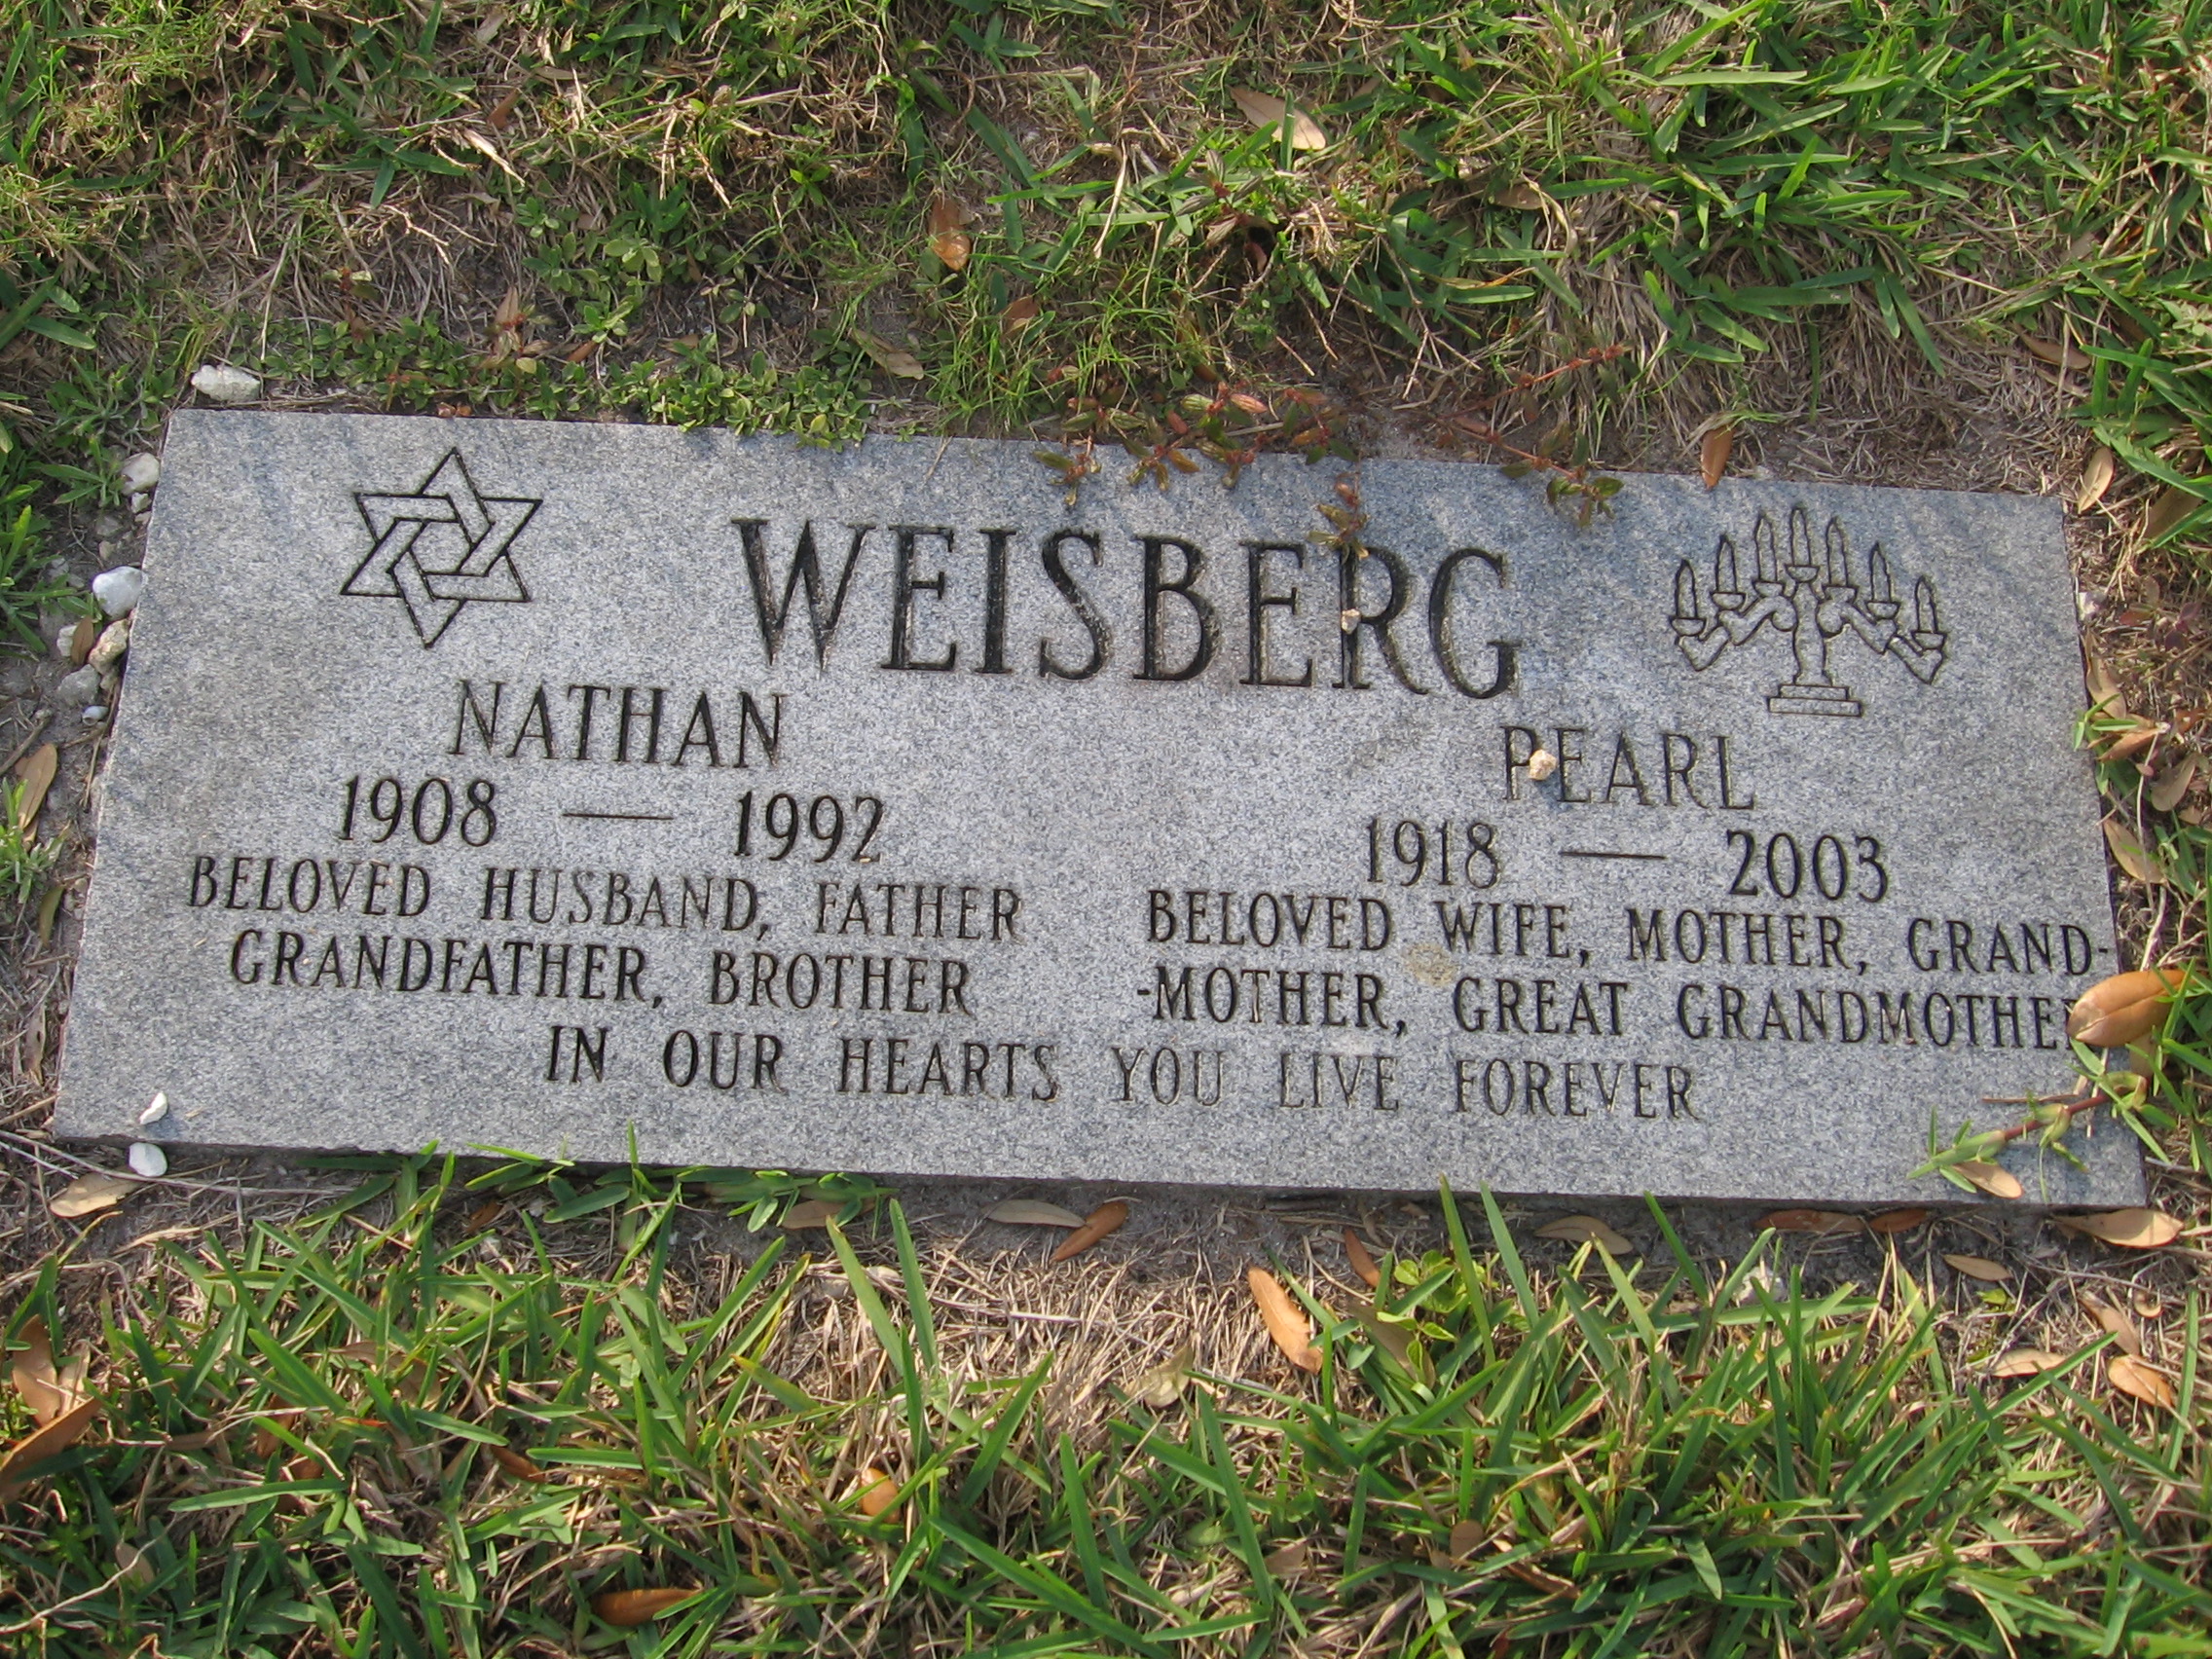 Nathan Weisberg